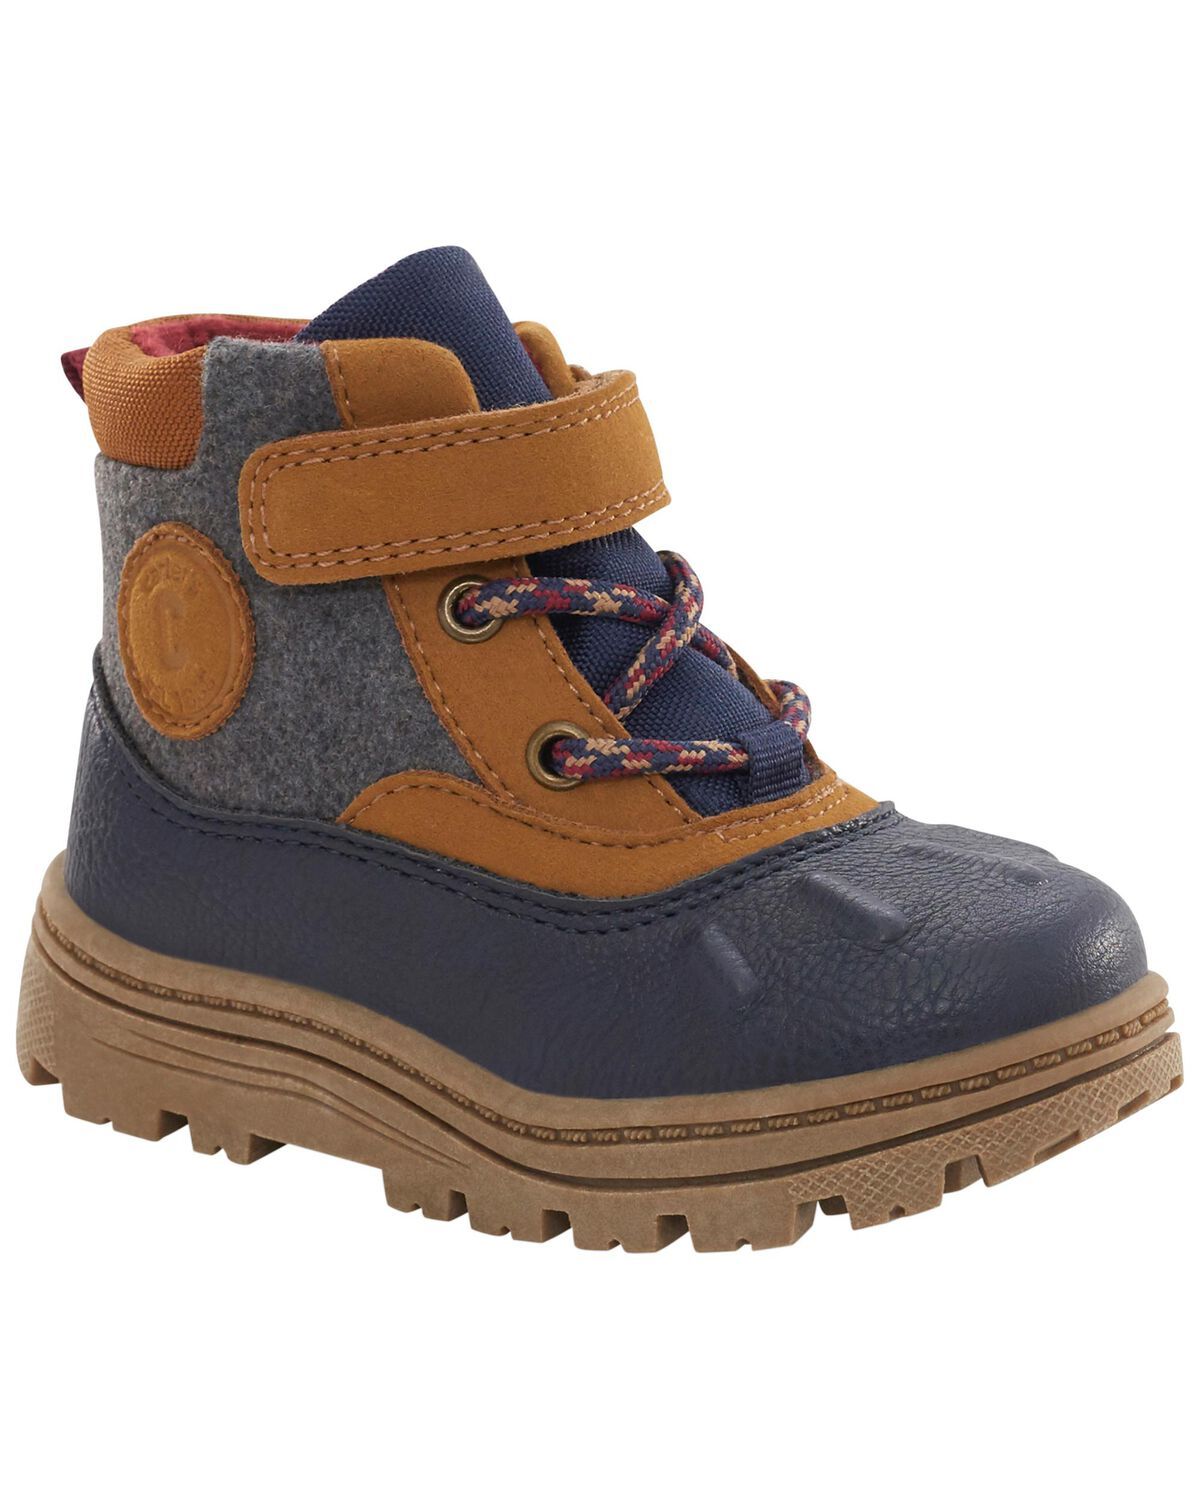 Navy/Brown Toddler Duck Boots | carters.com | Carter's